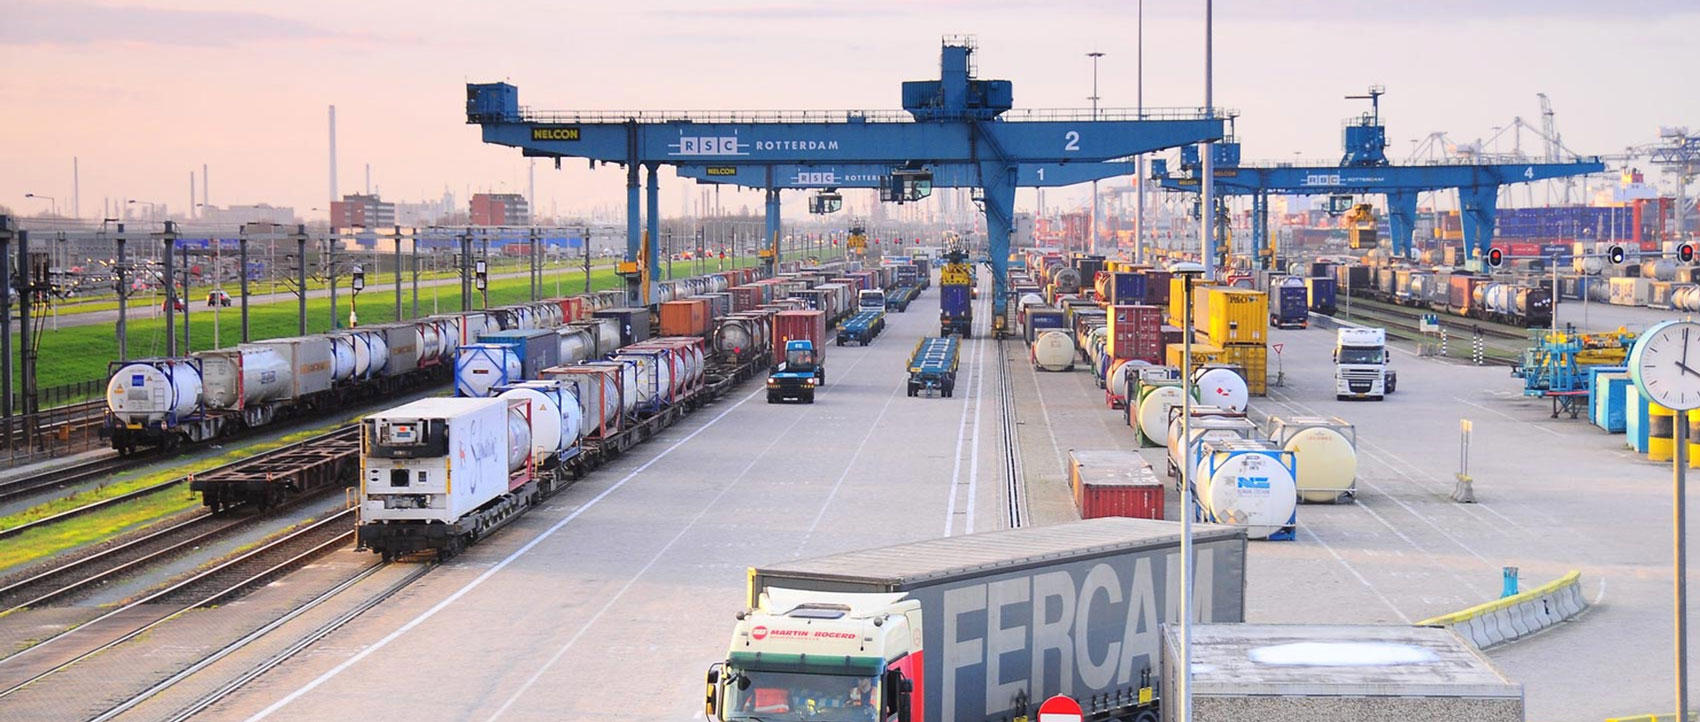 PortShuttle, Intermodal Transport Management